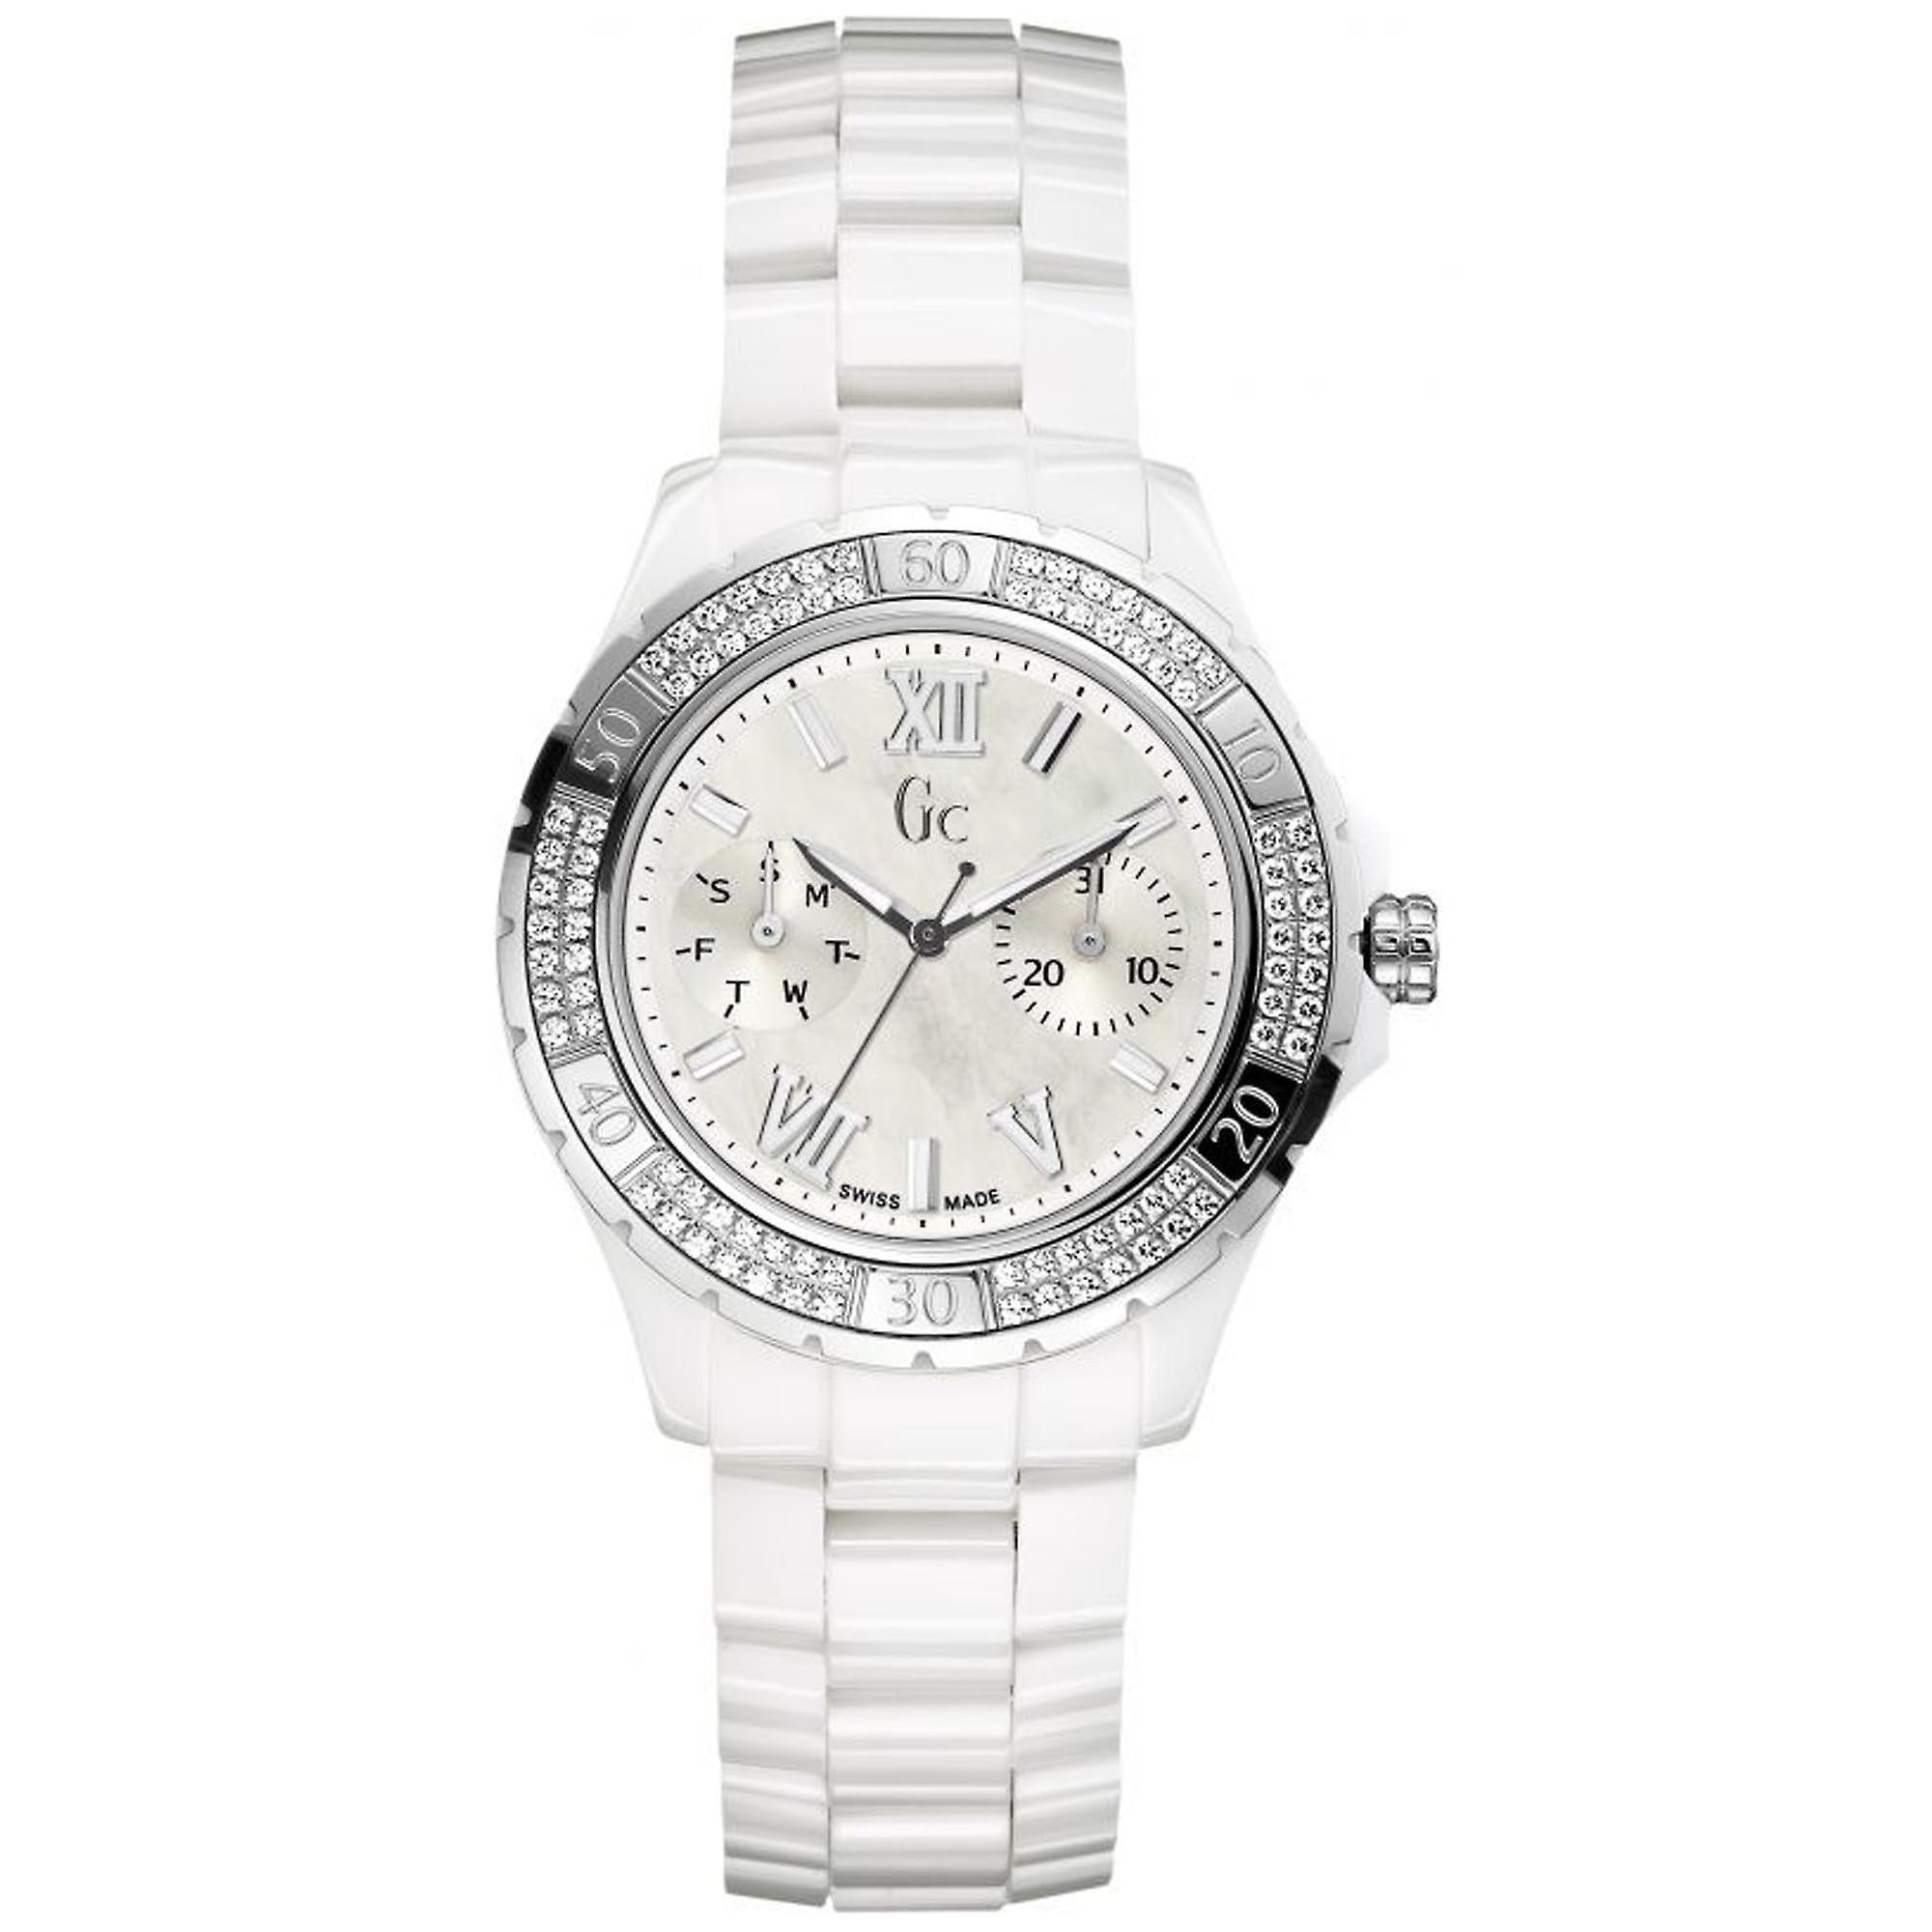 Купить g c. GC Wristwatch x10003g4s. Наручные часы GC. GC 10-75. Наручные часы GC x69111l1s.